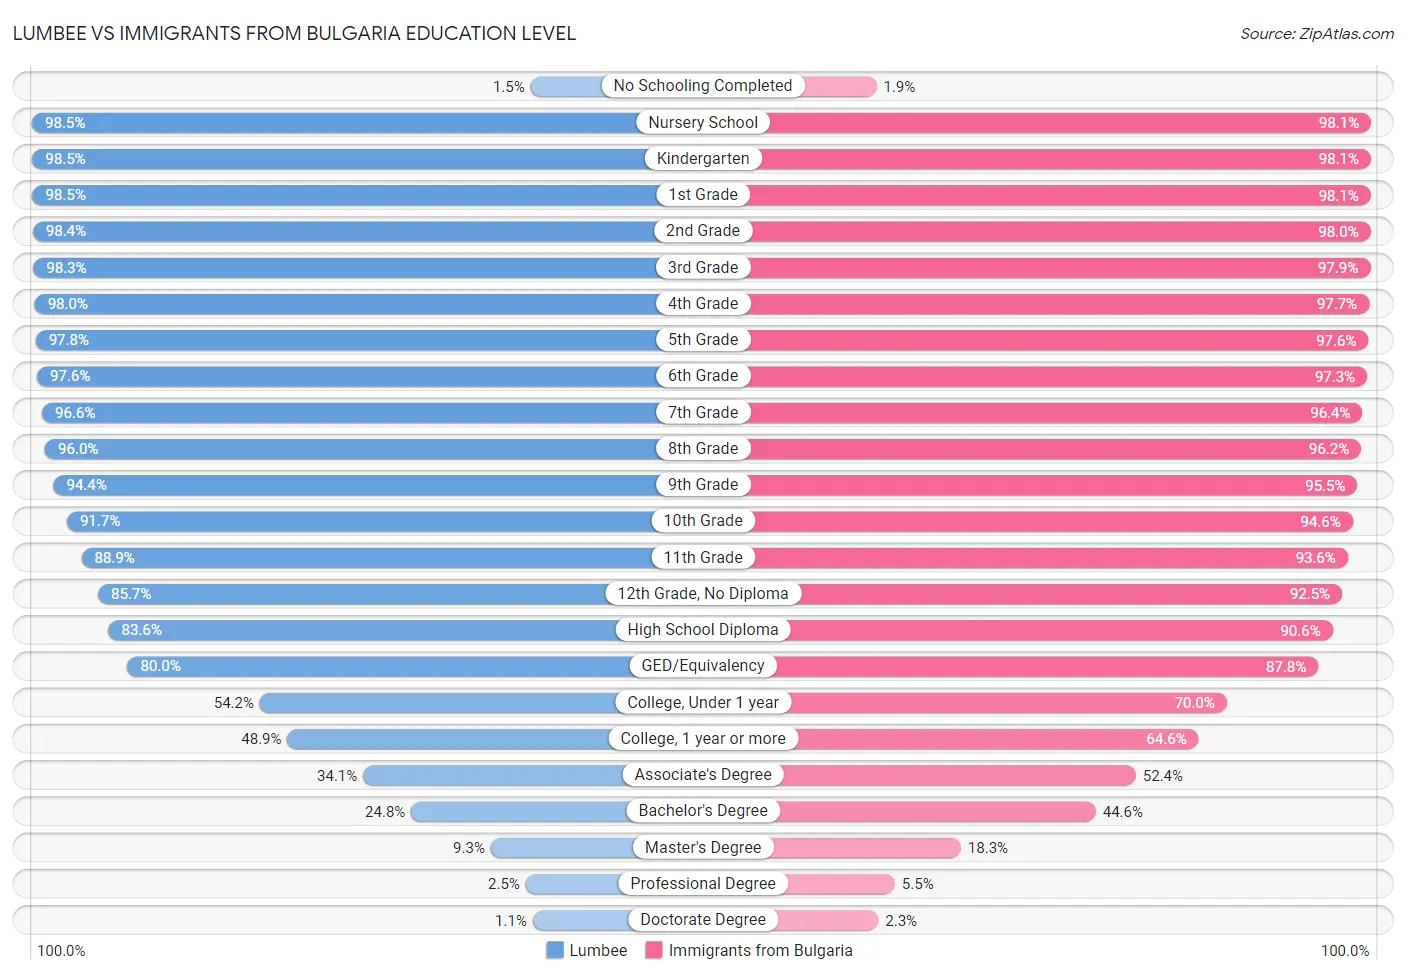 Lumbee vs Immigrants from Bulgaria Education Level